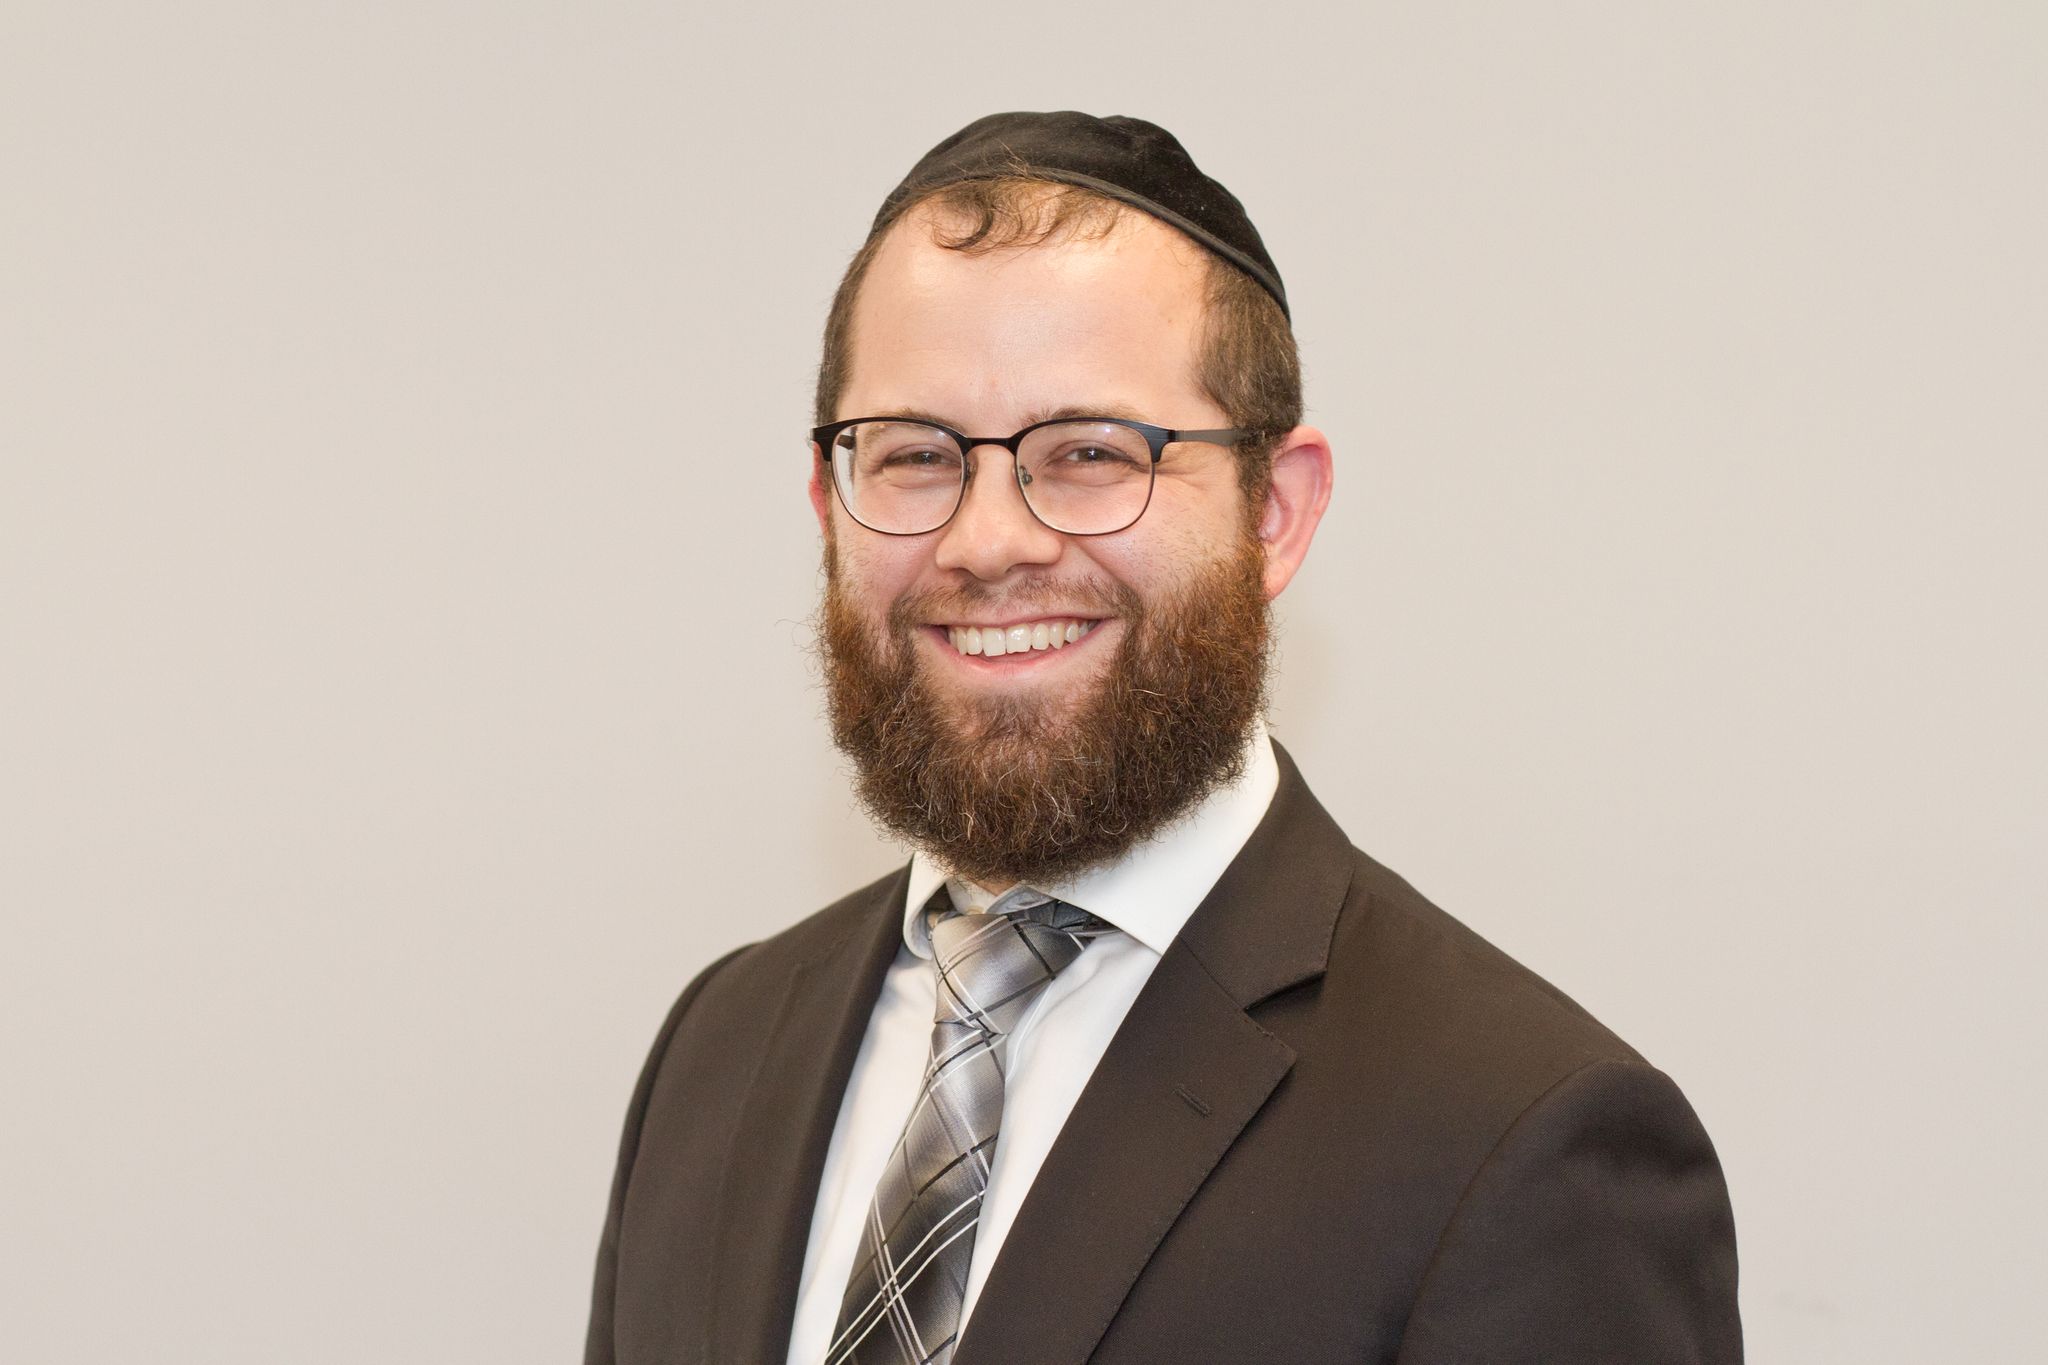 Rabbi Pridonoff